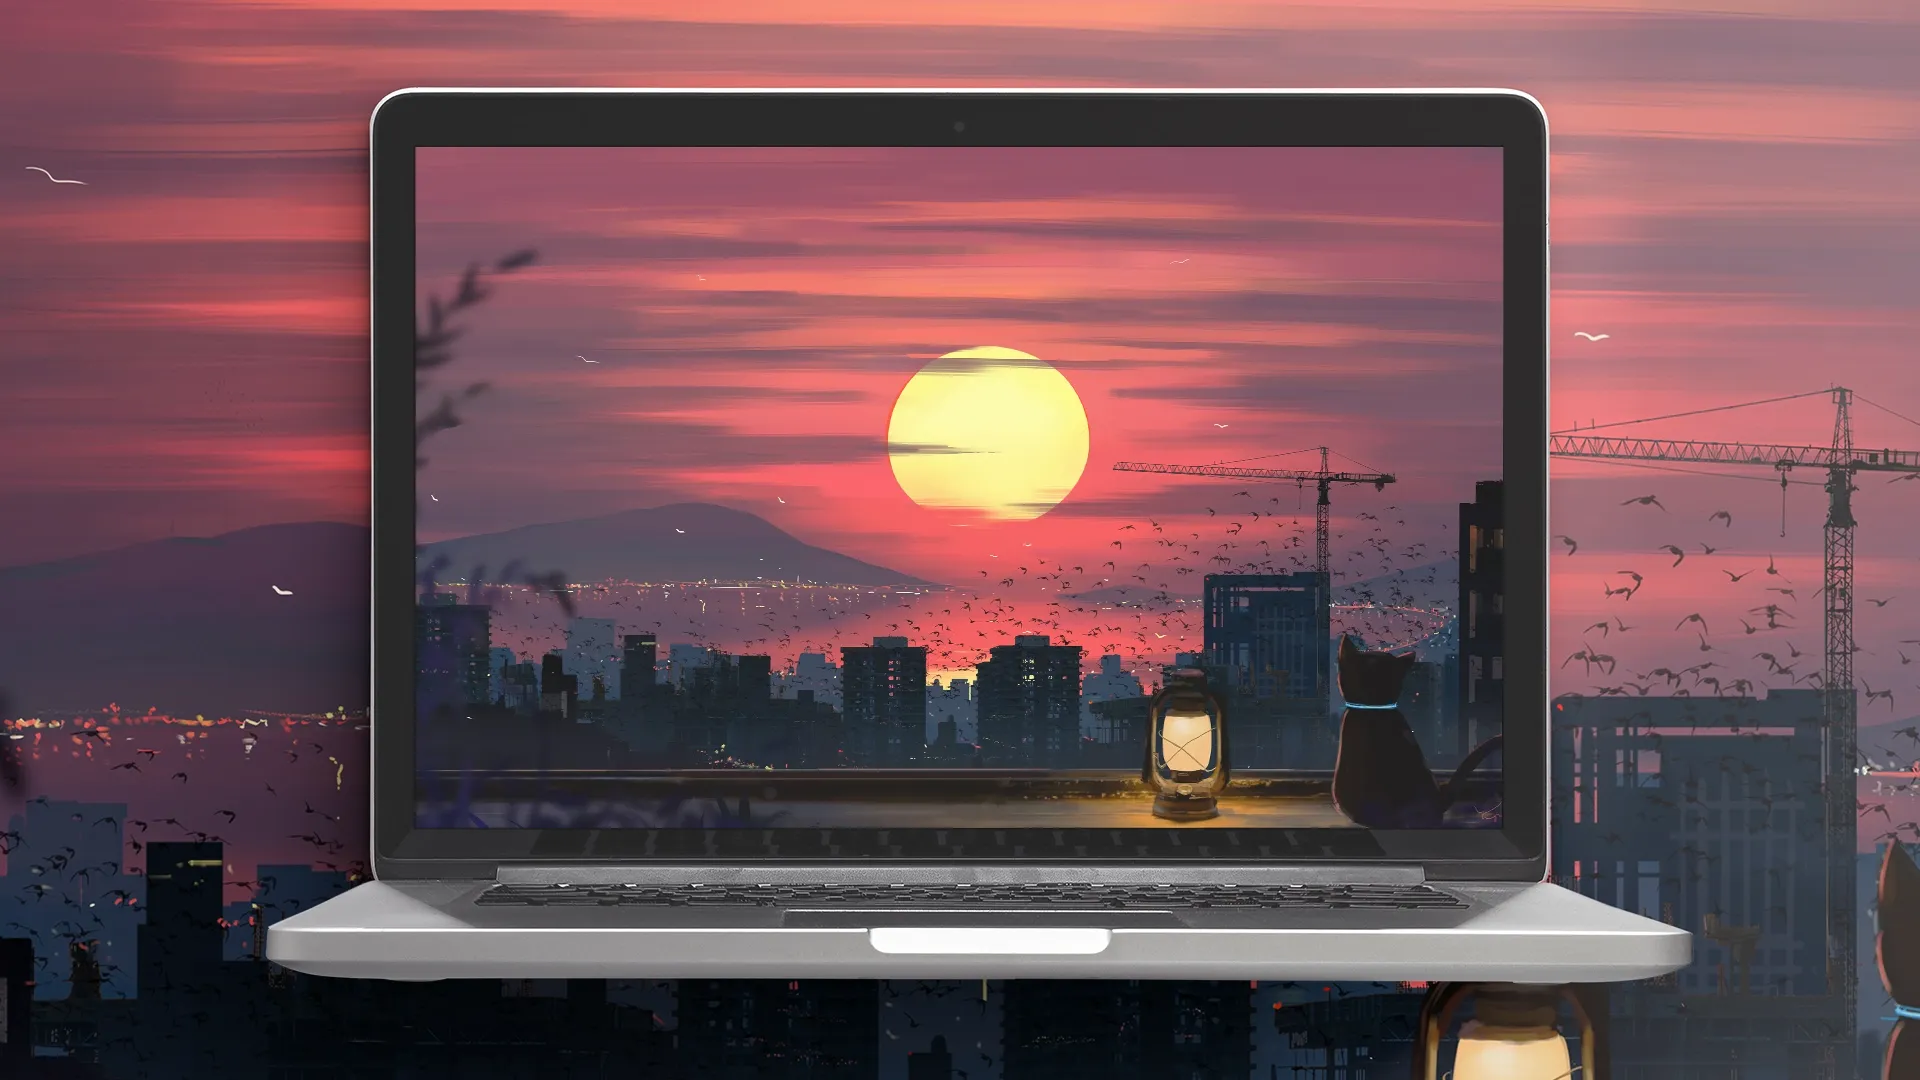 [Wallpaper laptop] Beautiful sunset illustration